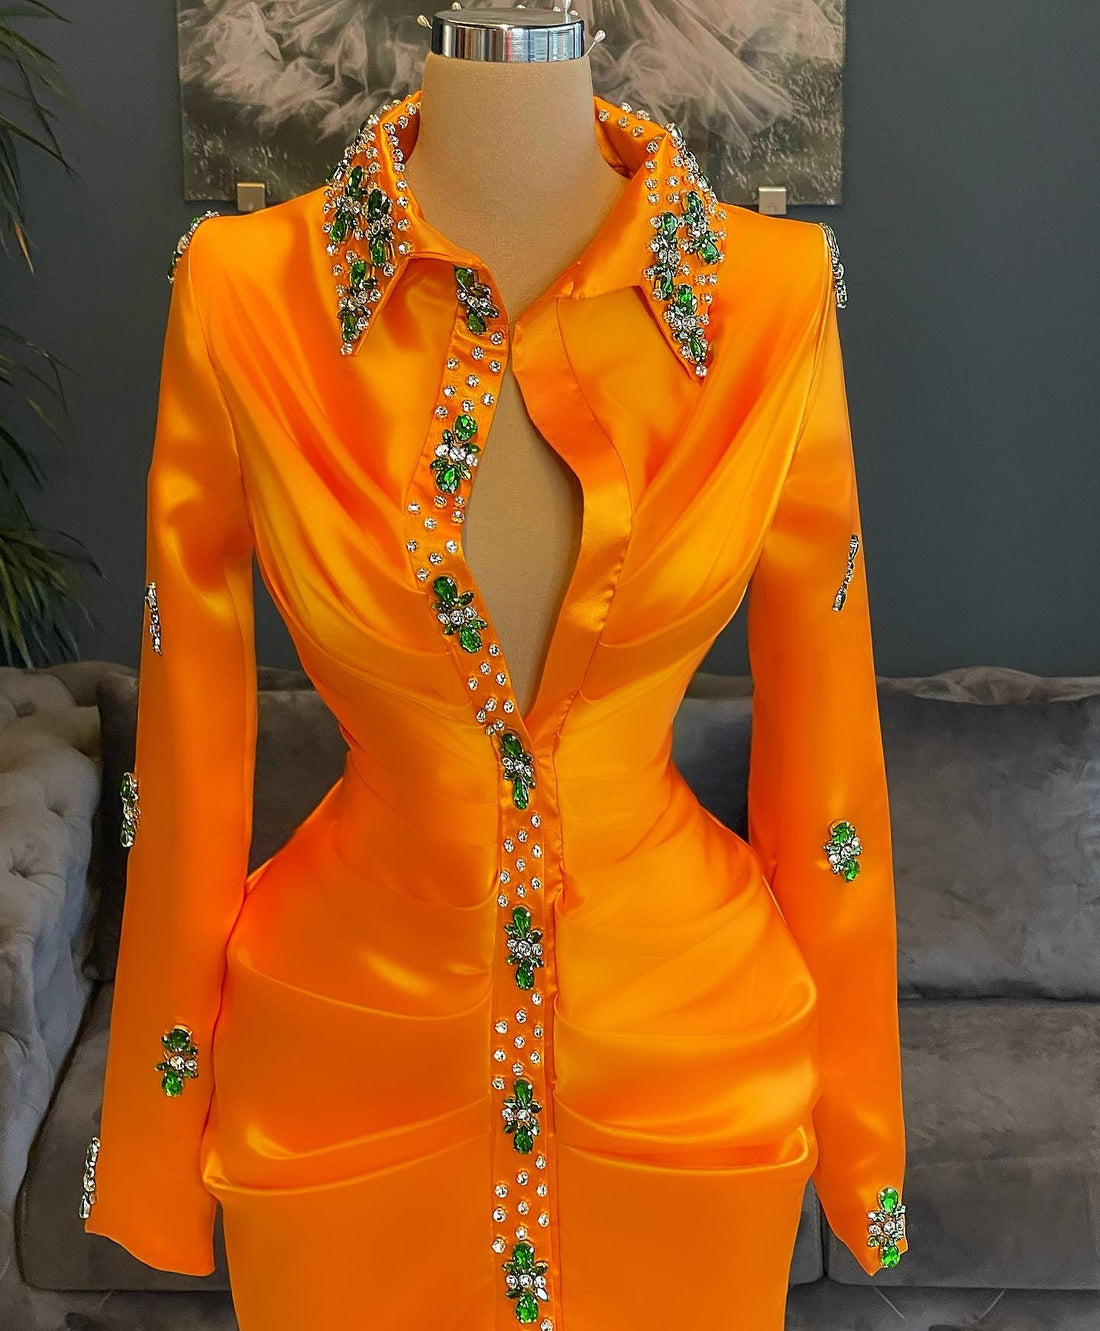 Kalani Orange Elegant Long Sleeves High Neck Crystals Evening Dress